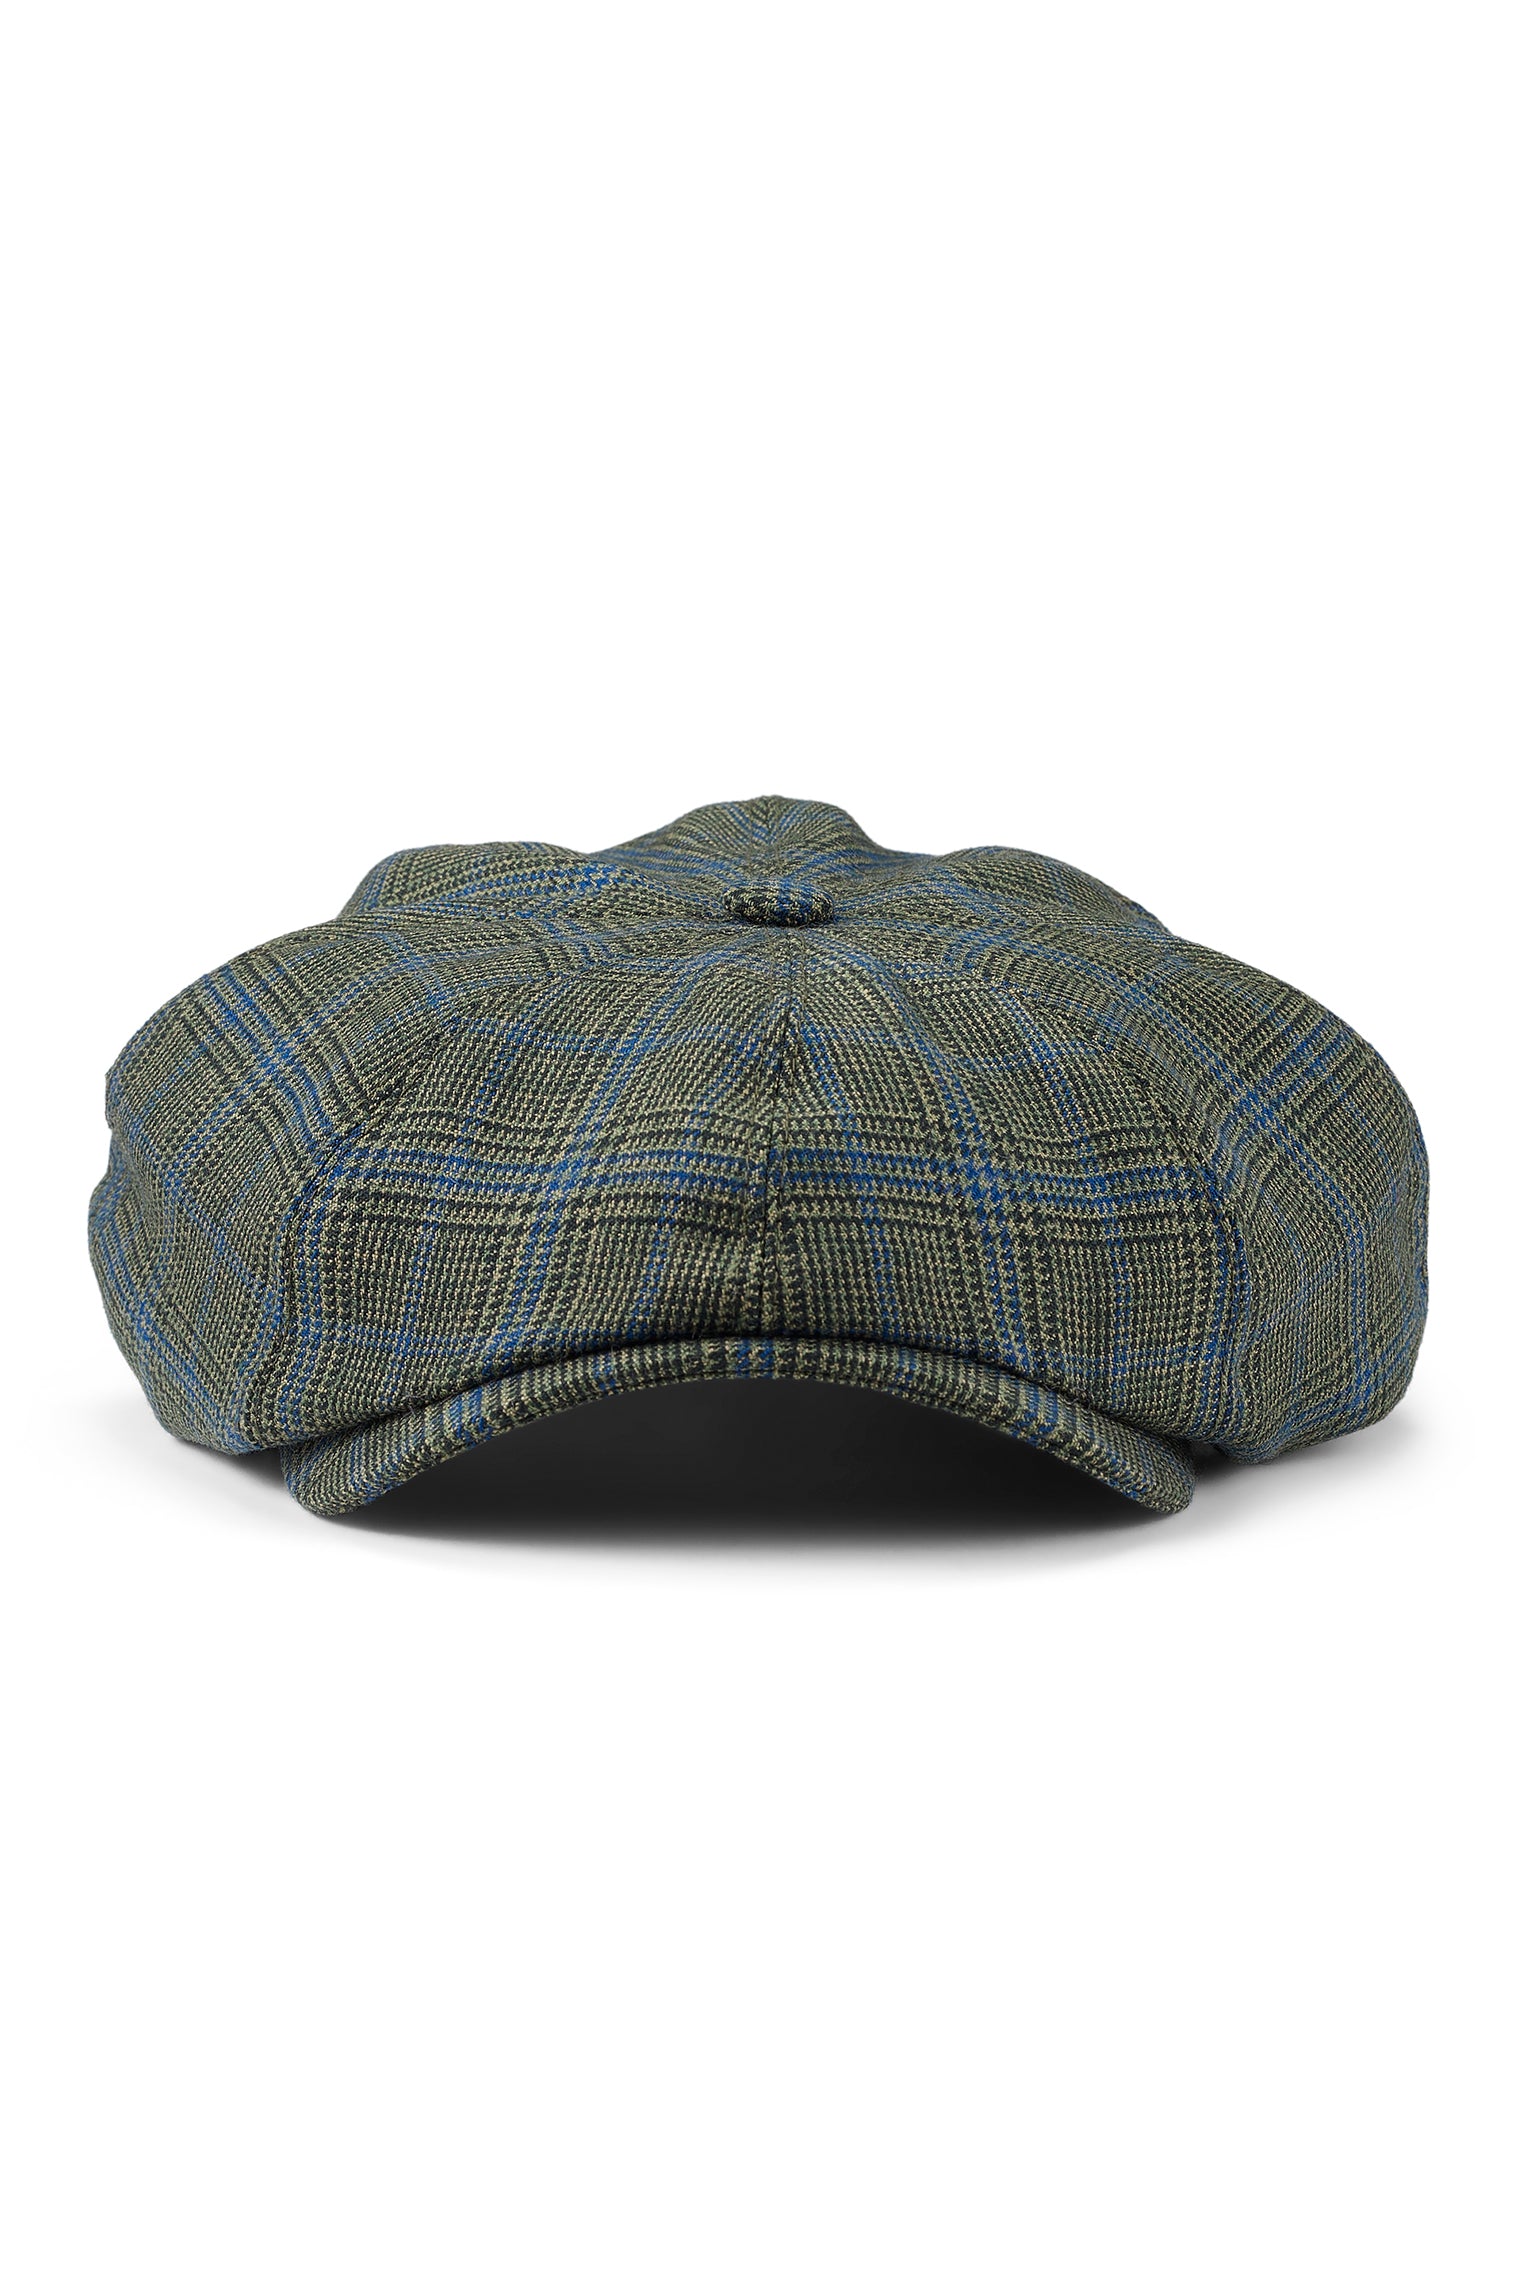 Highgrove Green Bakerboy Cap - New Season Men's Hats - Lock & Co. Hatters London UK